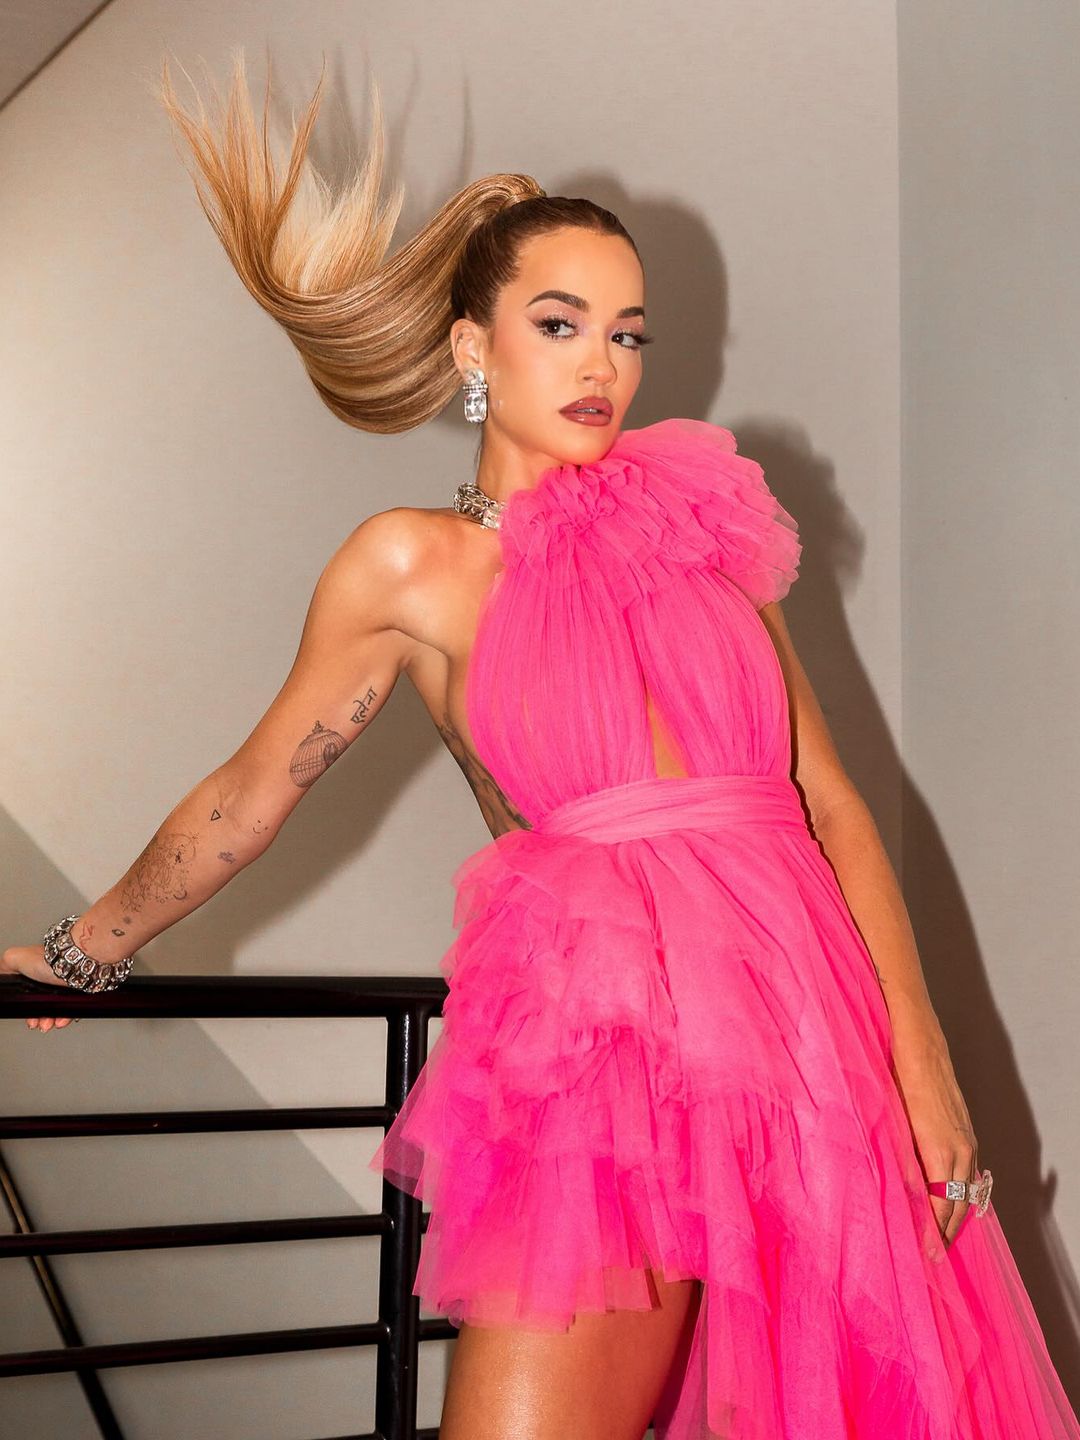 Rita Ora wears a bright Barbie pink tulle dress on her Instagram